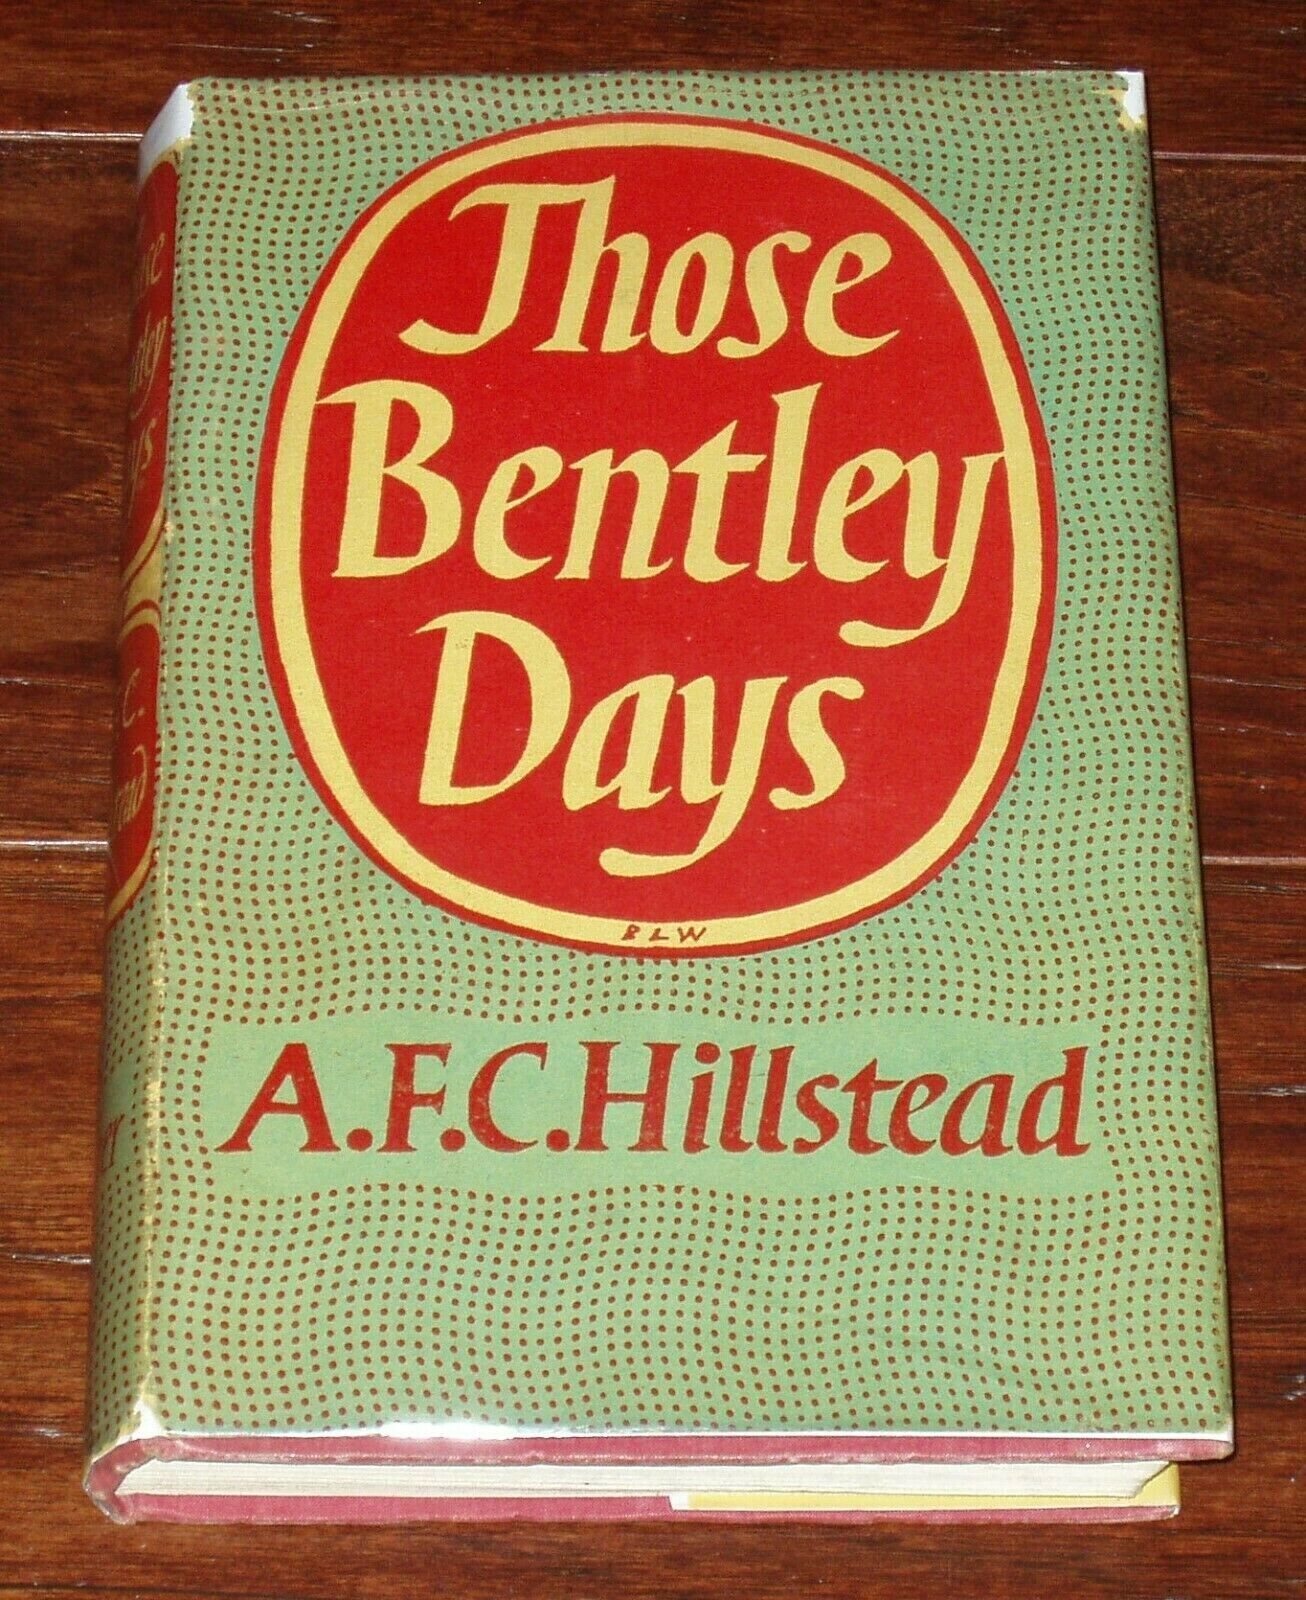 THOSE BENTLEY DAYS by A. F. C. Hillstead  - 1953 Hardbound - First Edition w DJ